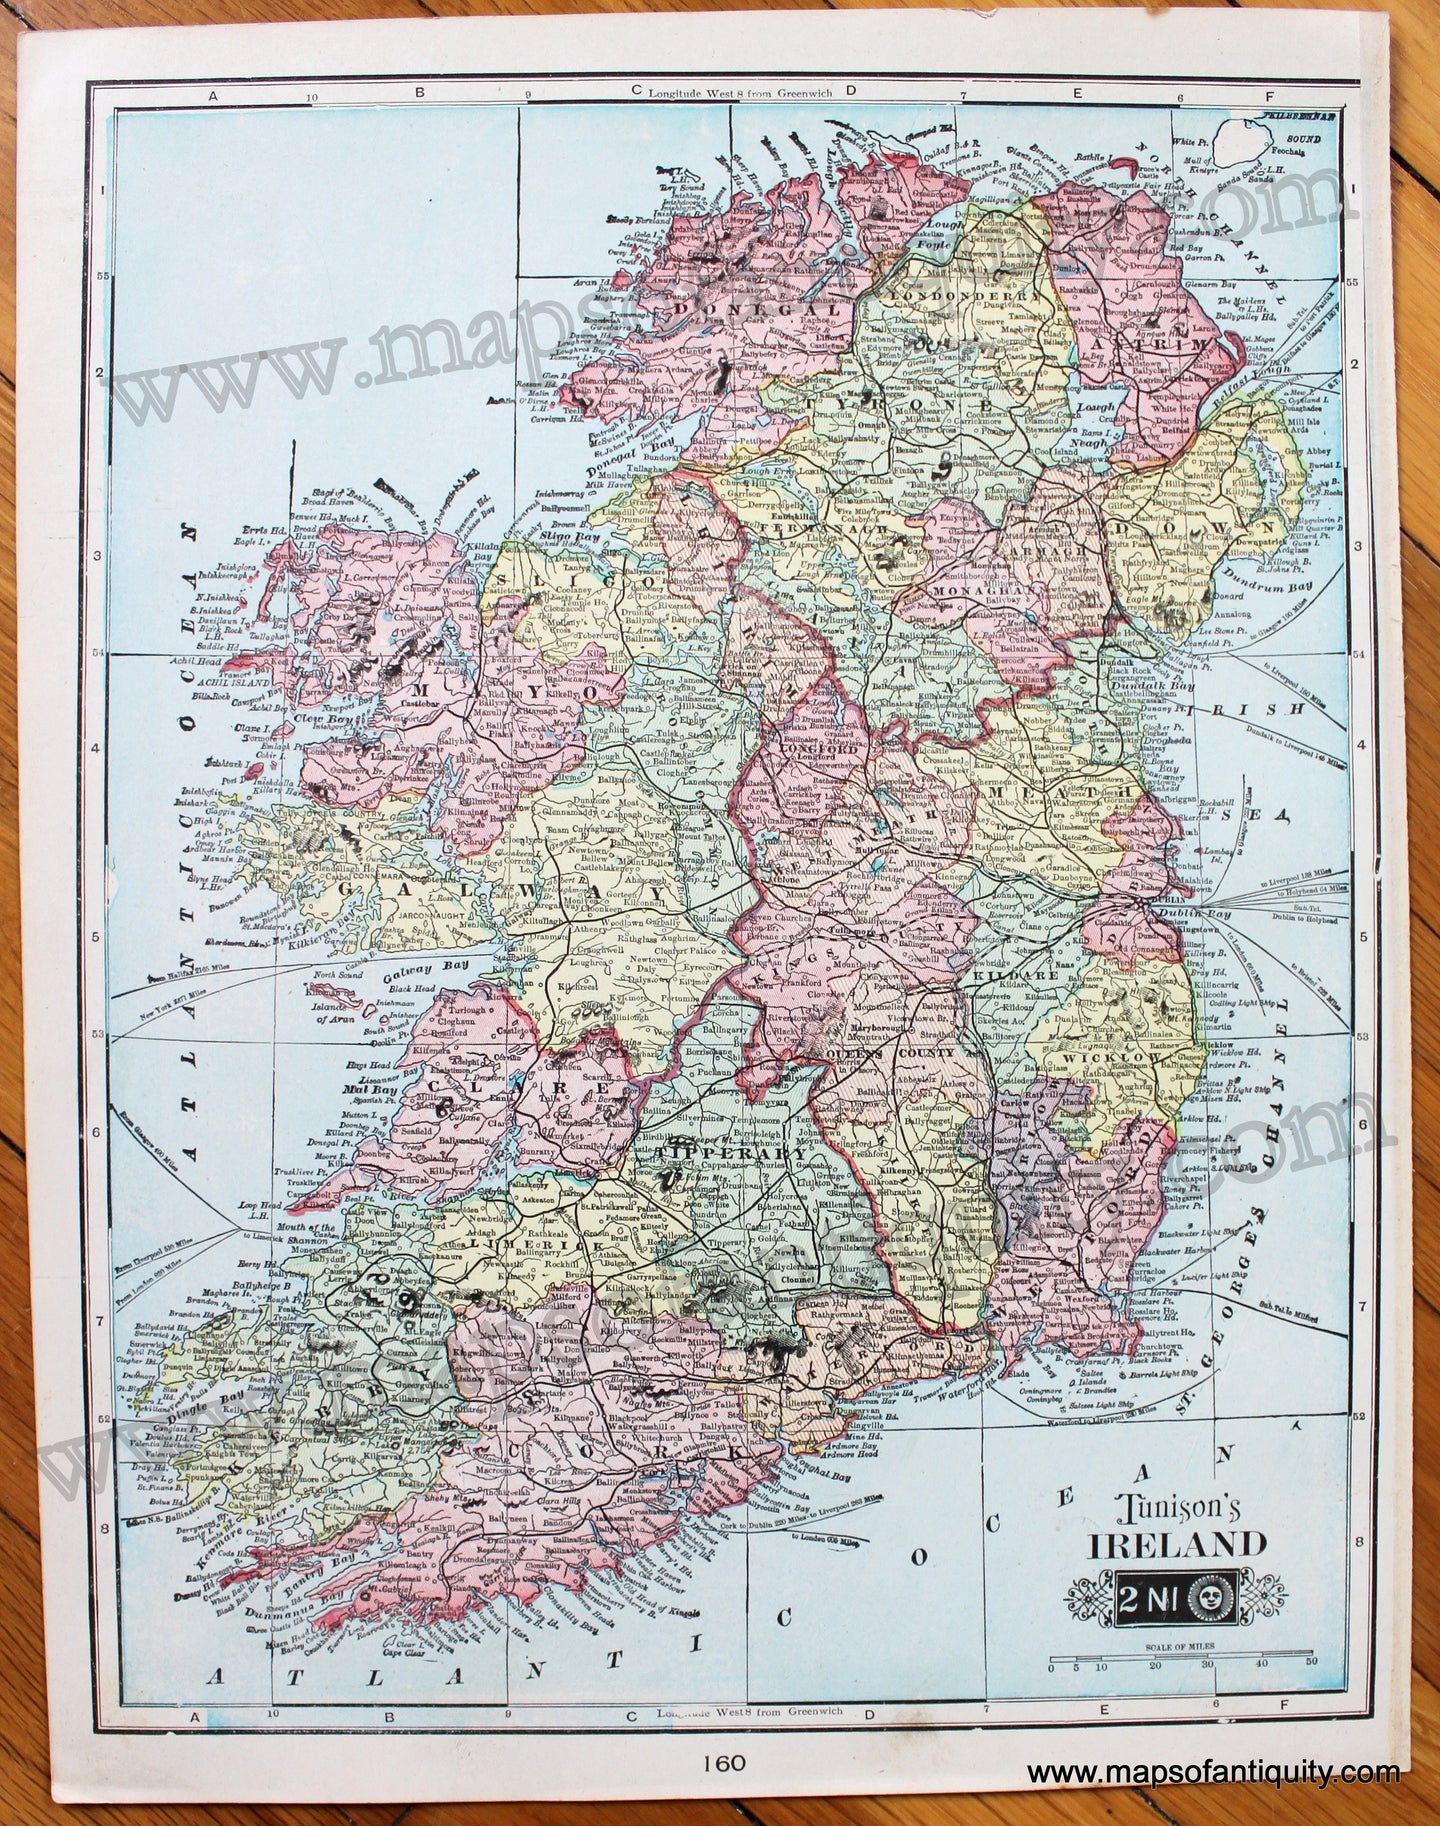 Antique-Printed-Color-Map-Tunison's-Ireland-1903-Tunison-Ireland-1800s-19th-century-Maps-of-Antiquity